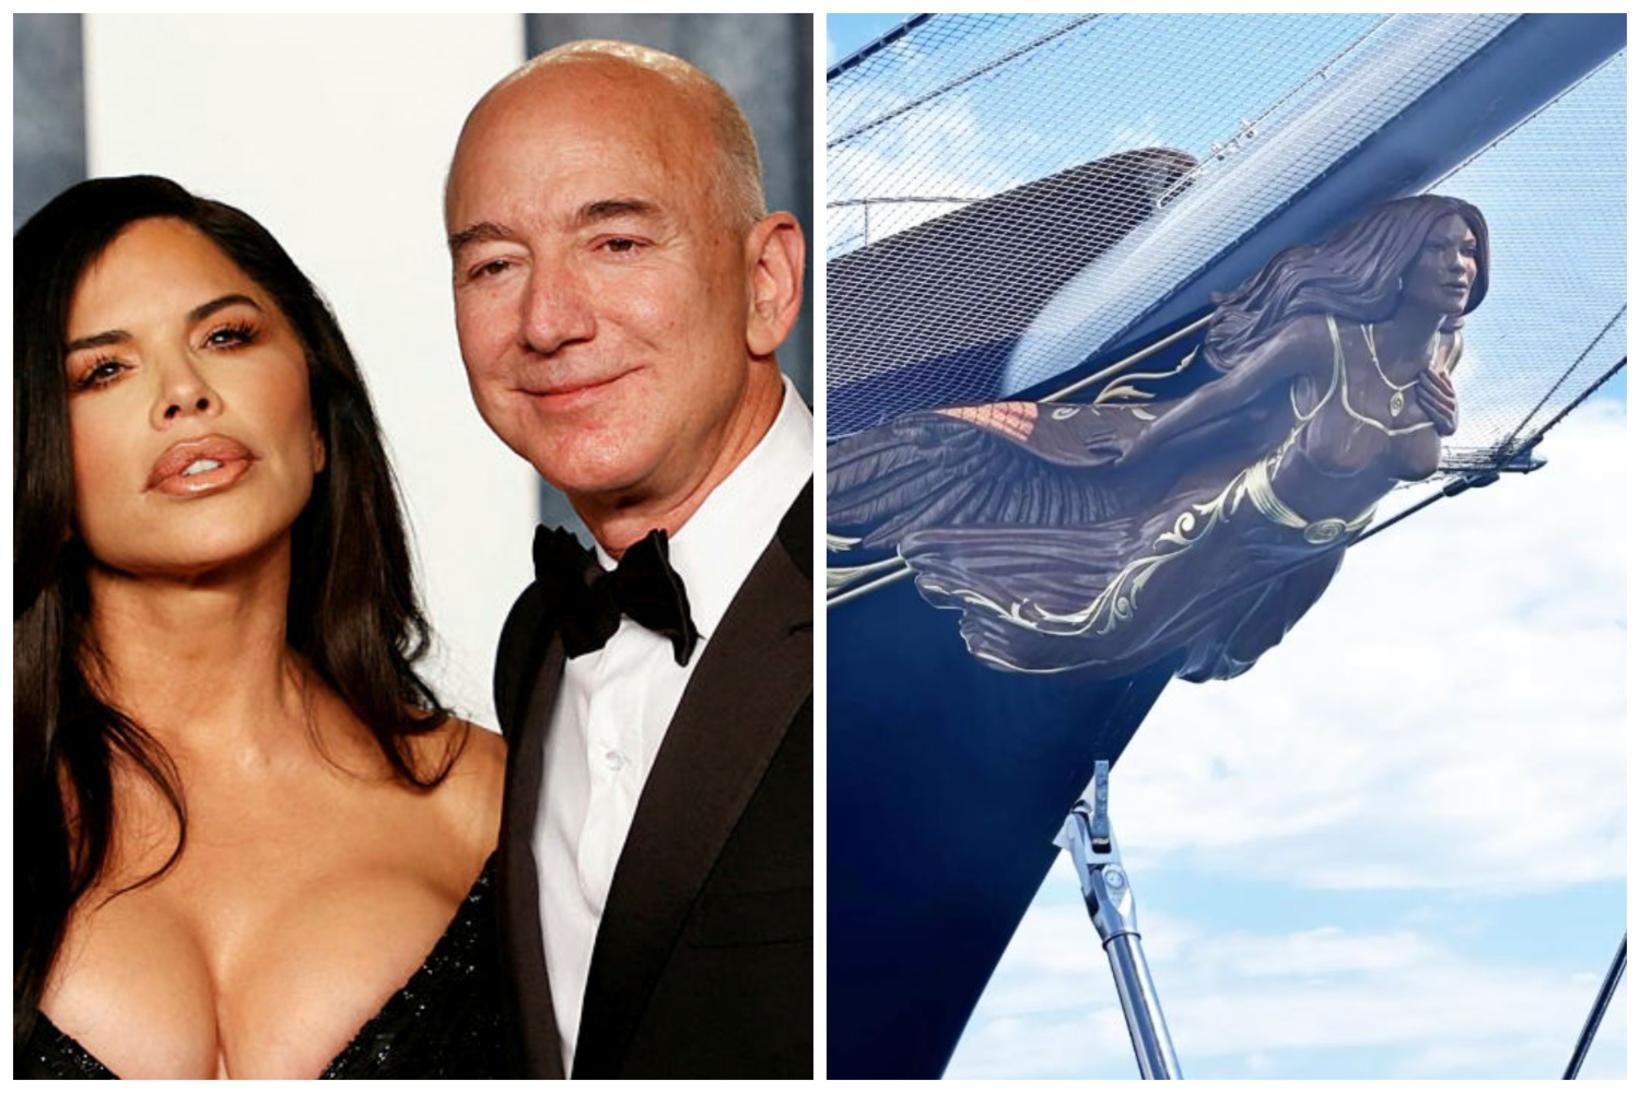 Jeff Bezos og Lauren Sánchez njóta nú lífsins á nýju …